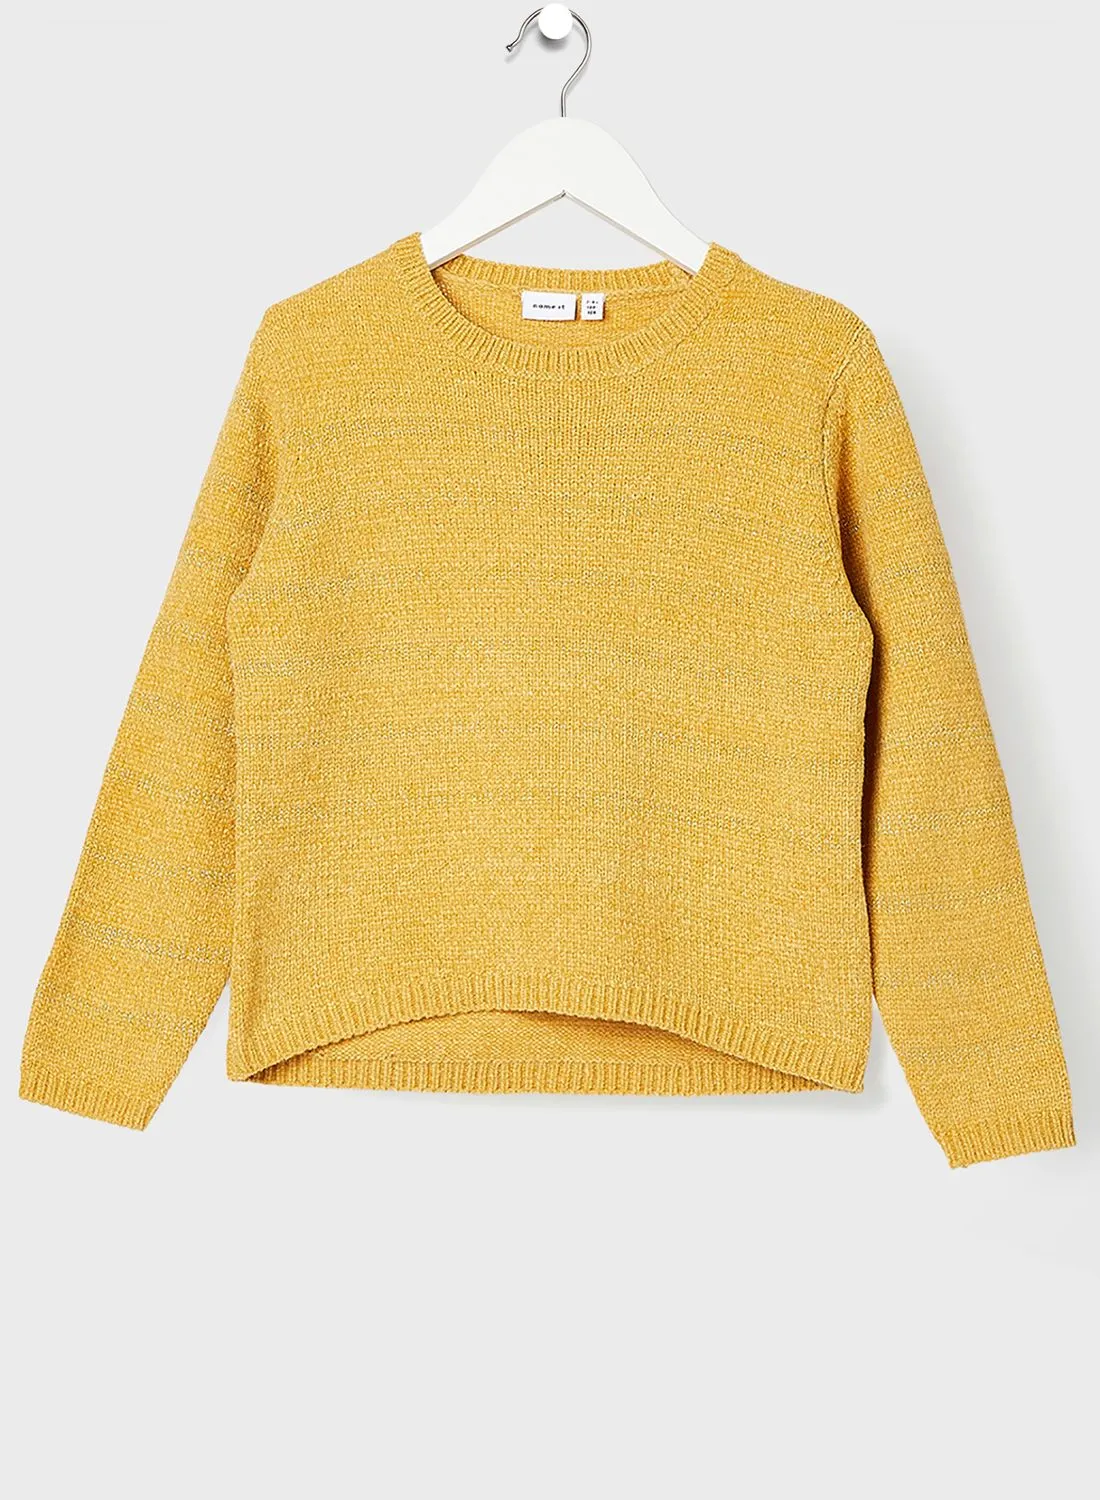 NAME IT Kids Long Sleeve Sweater